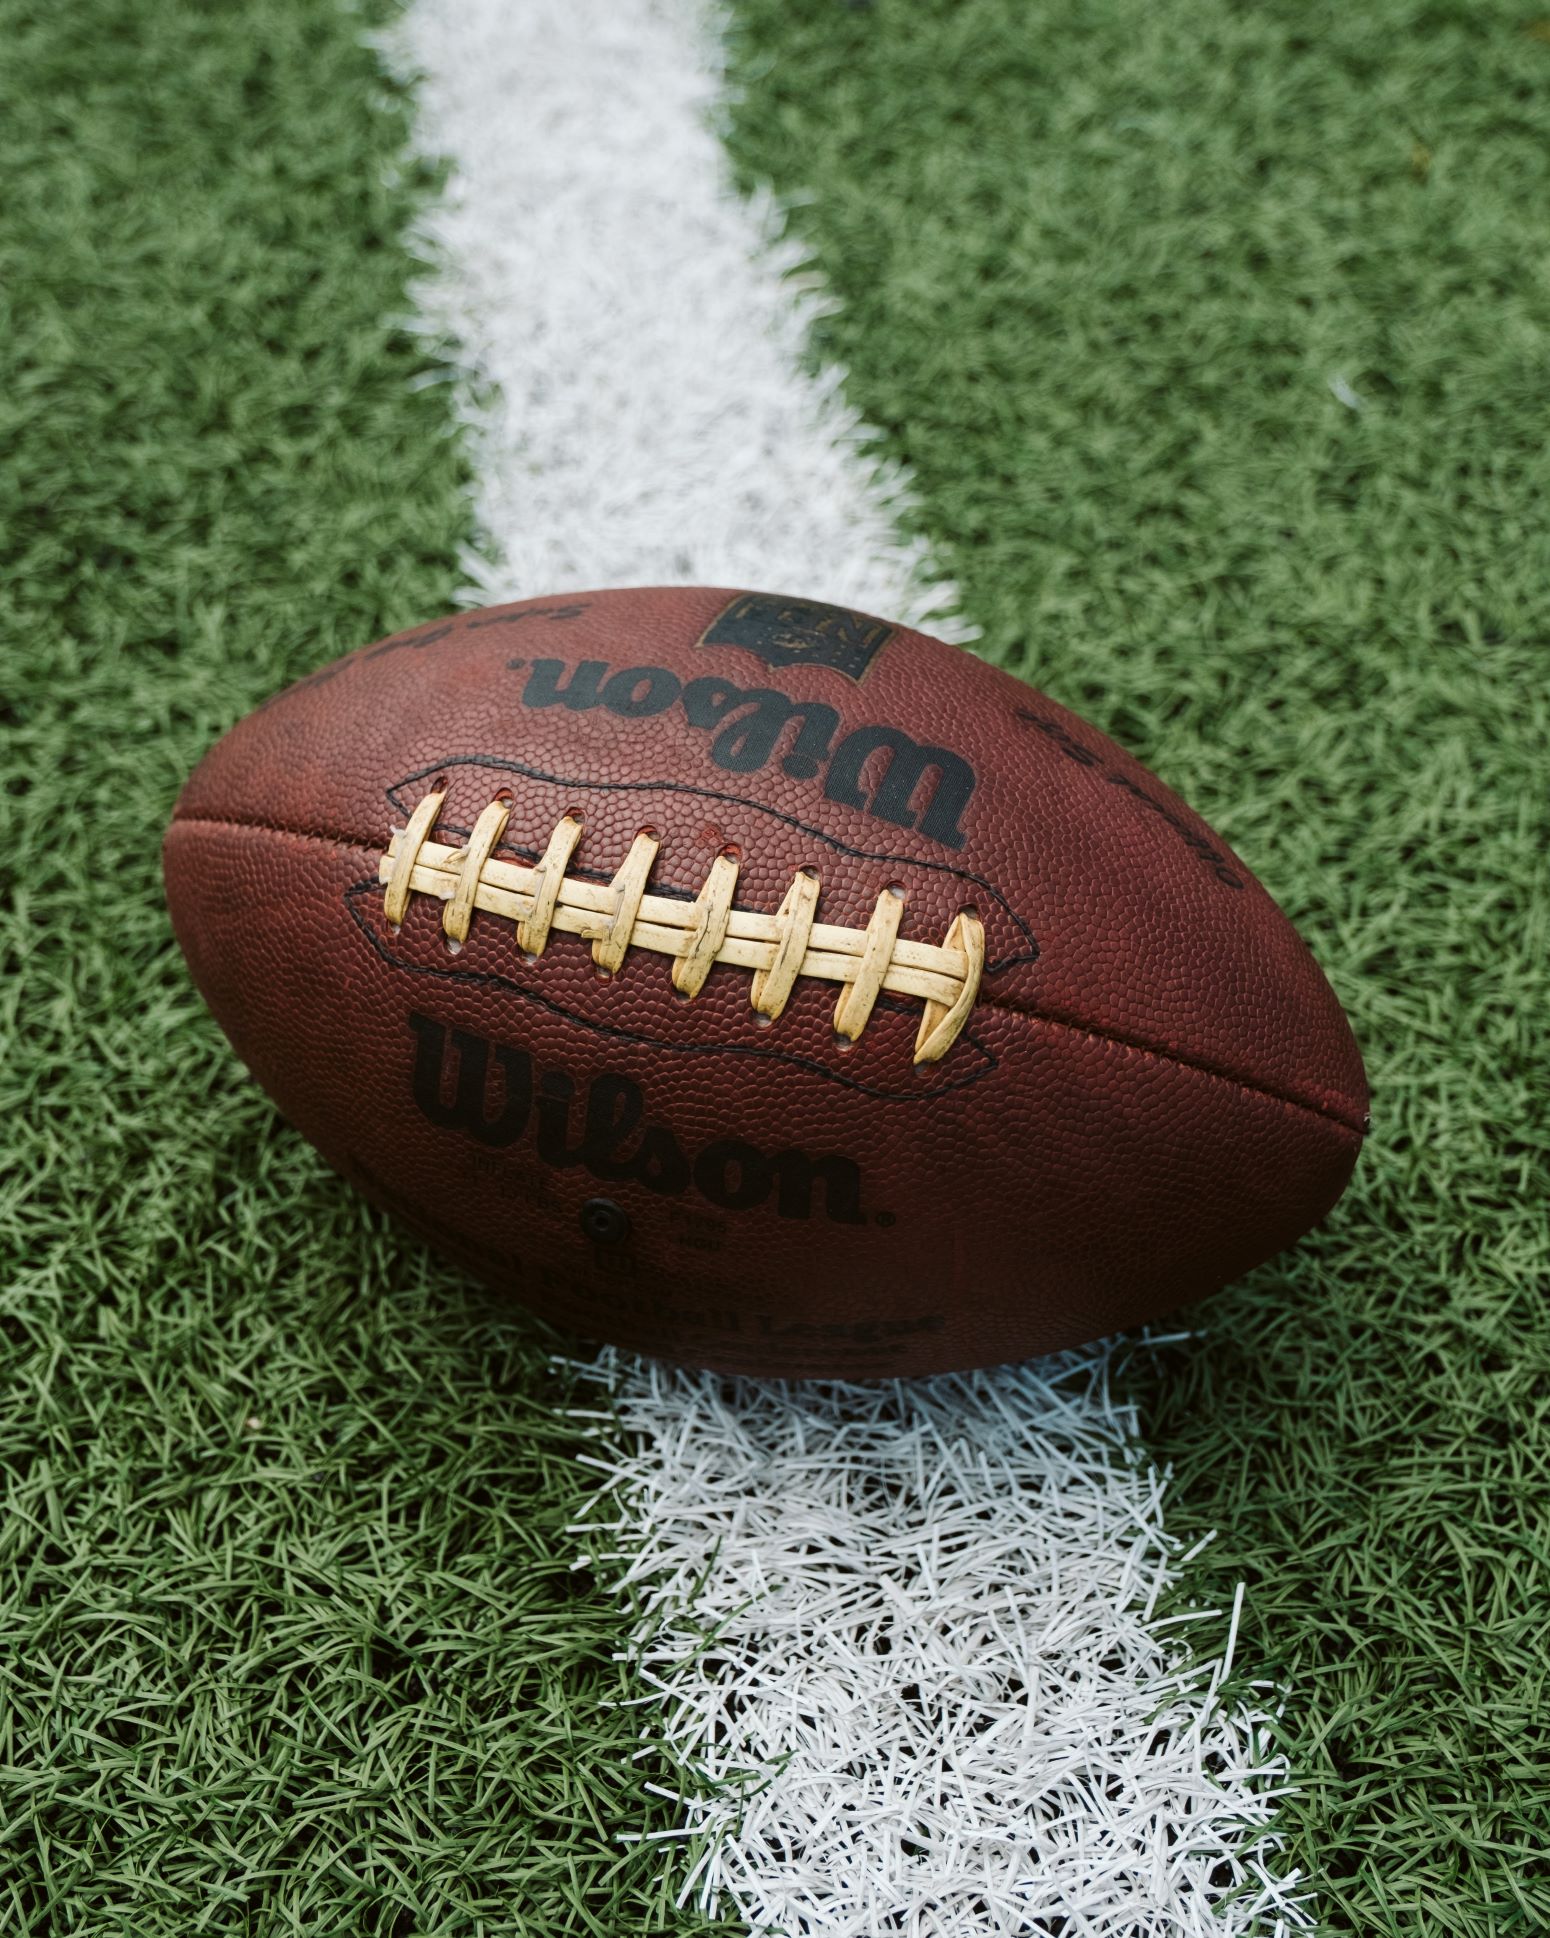 An image of a football on a football field.